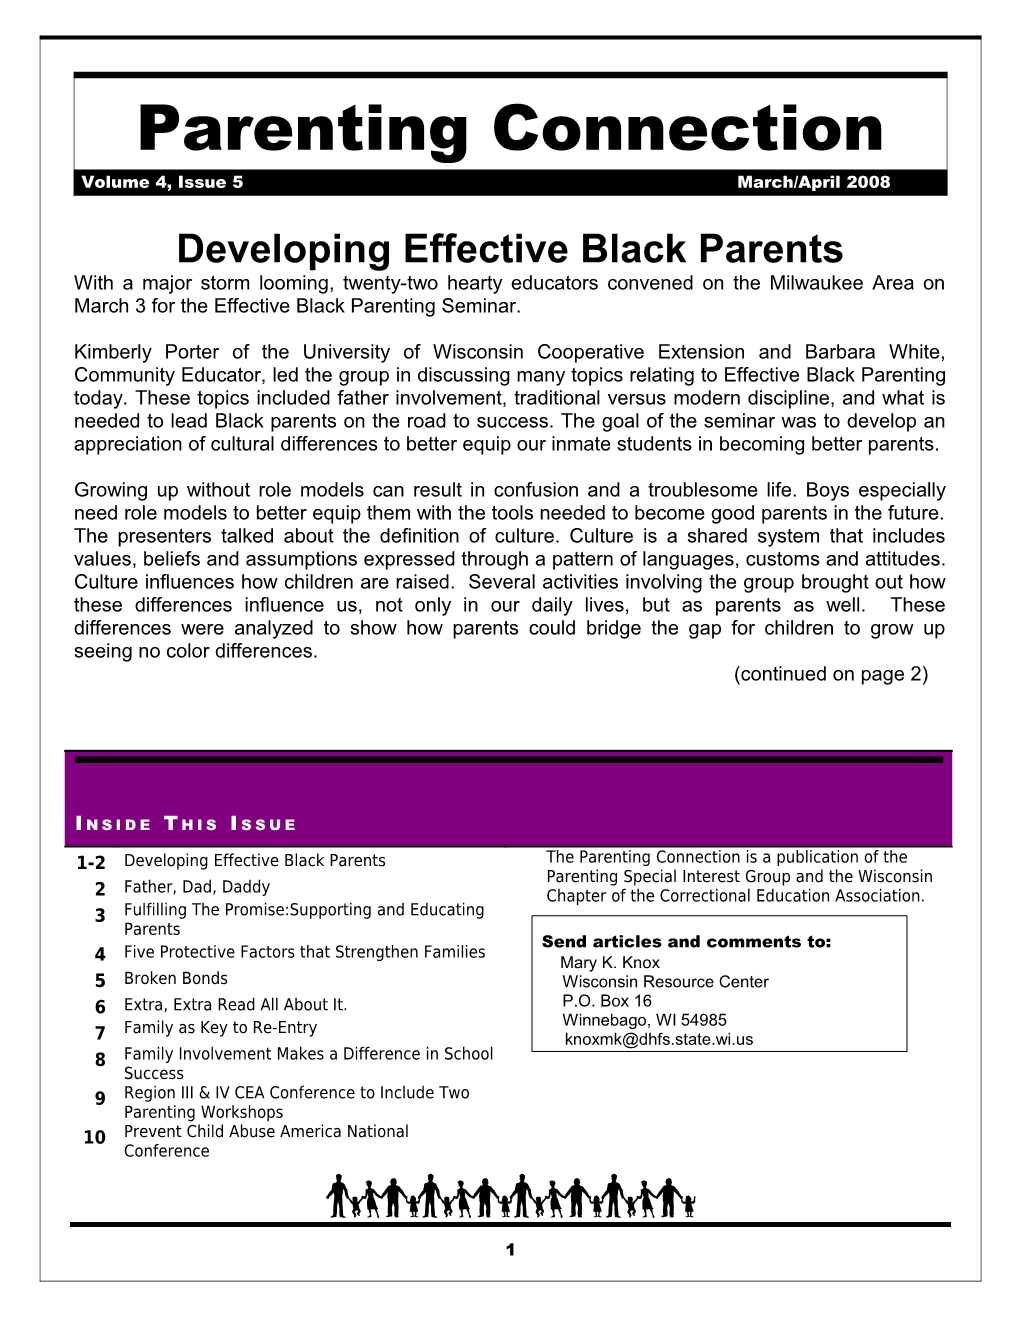 Developing Effective Black Parents